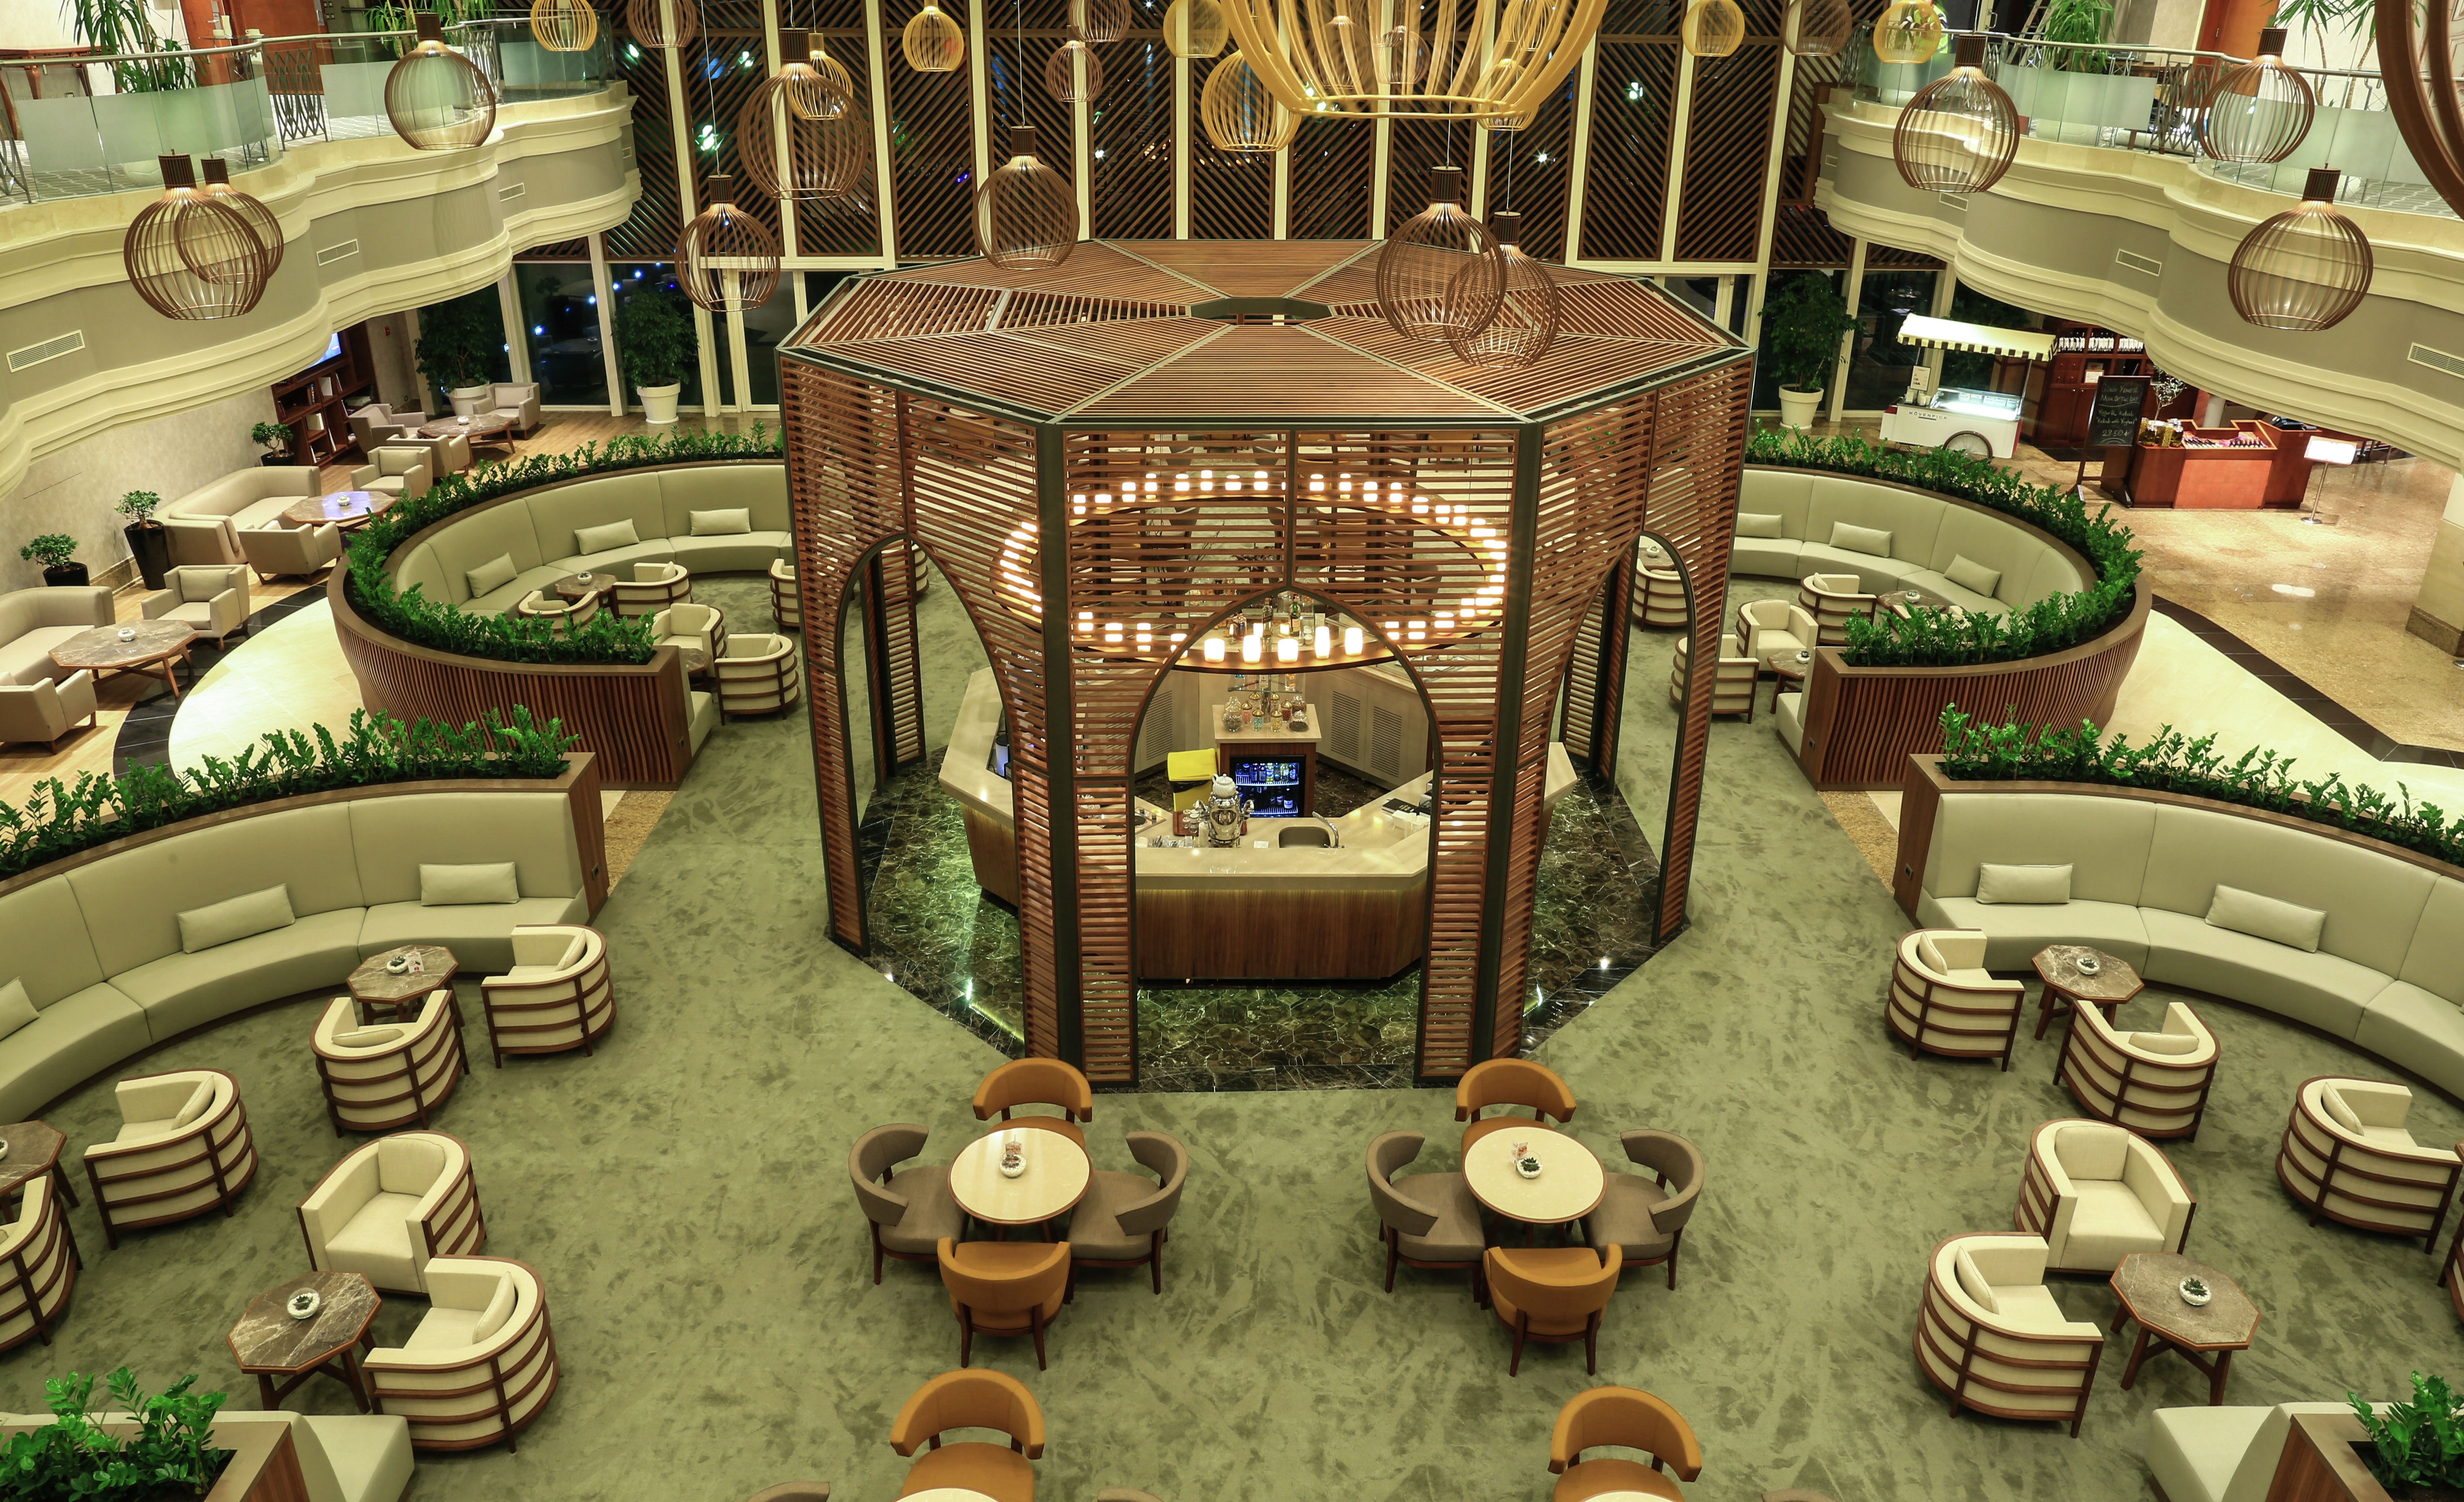 Adana HiltonSA Gallery Lounge Lobby View with High Ceilings